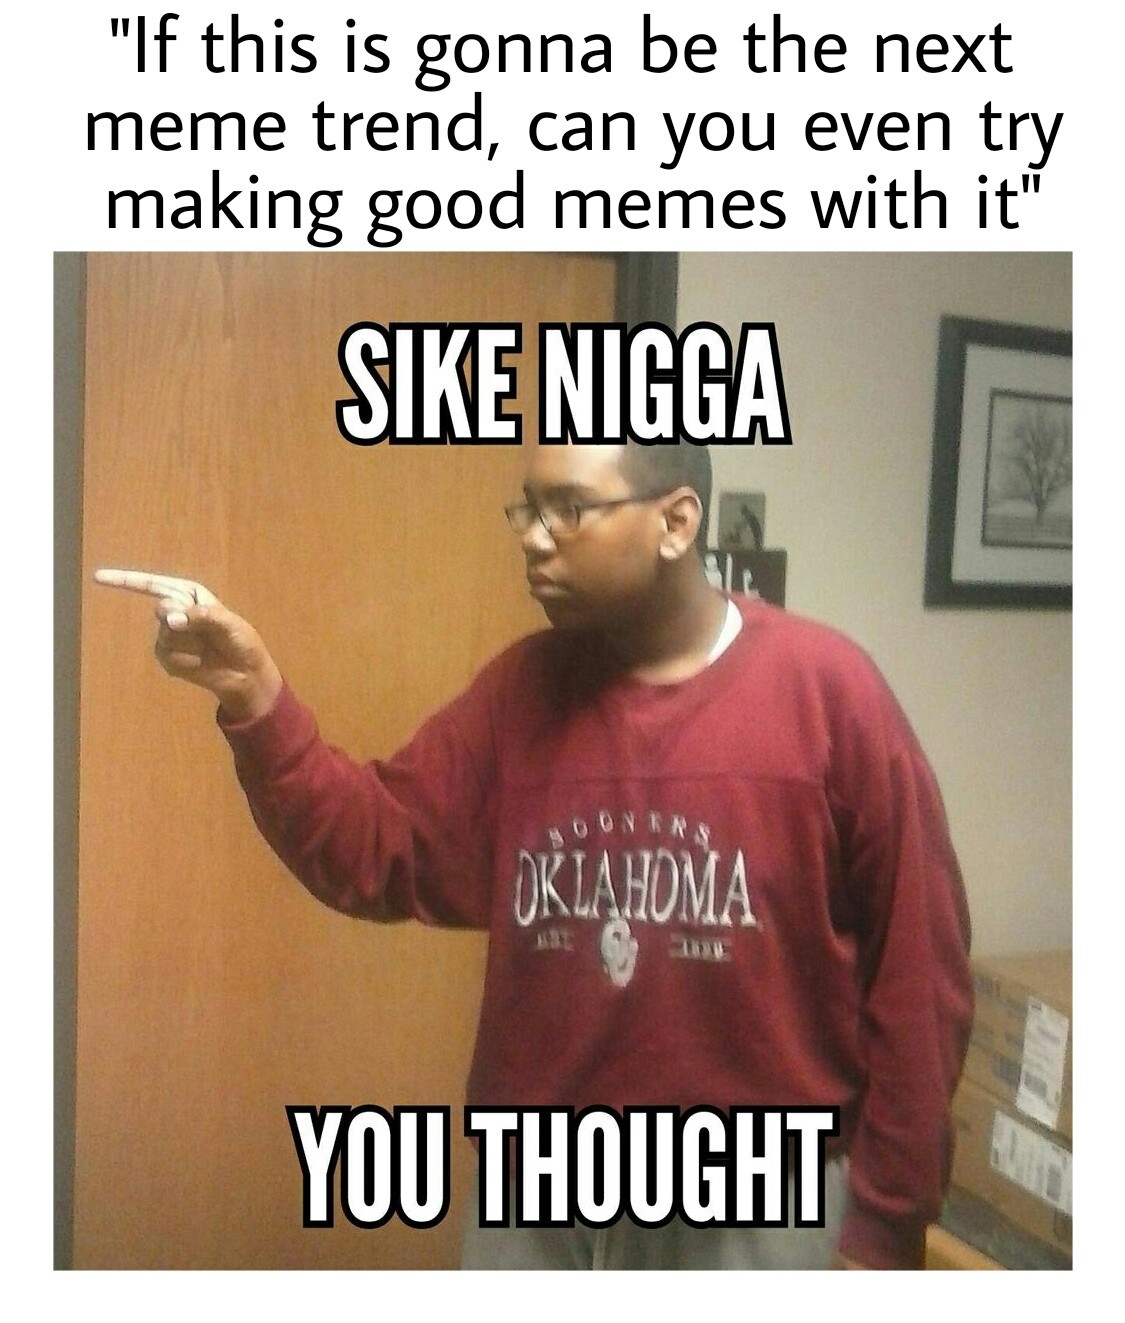 sike nigga you thought - meme.